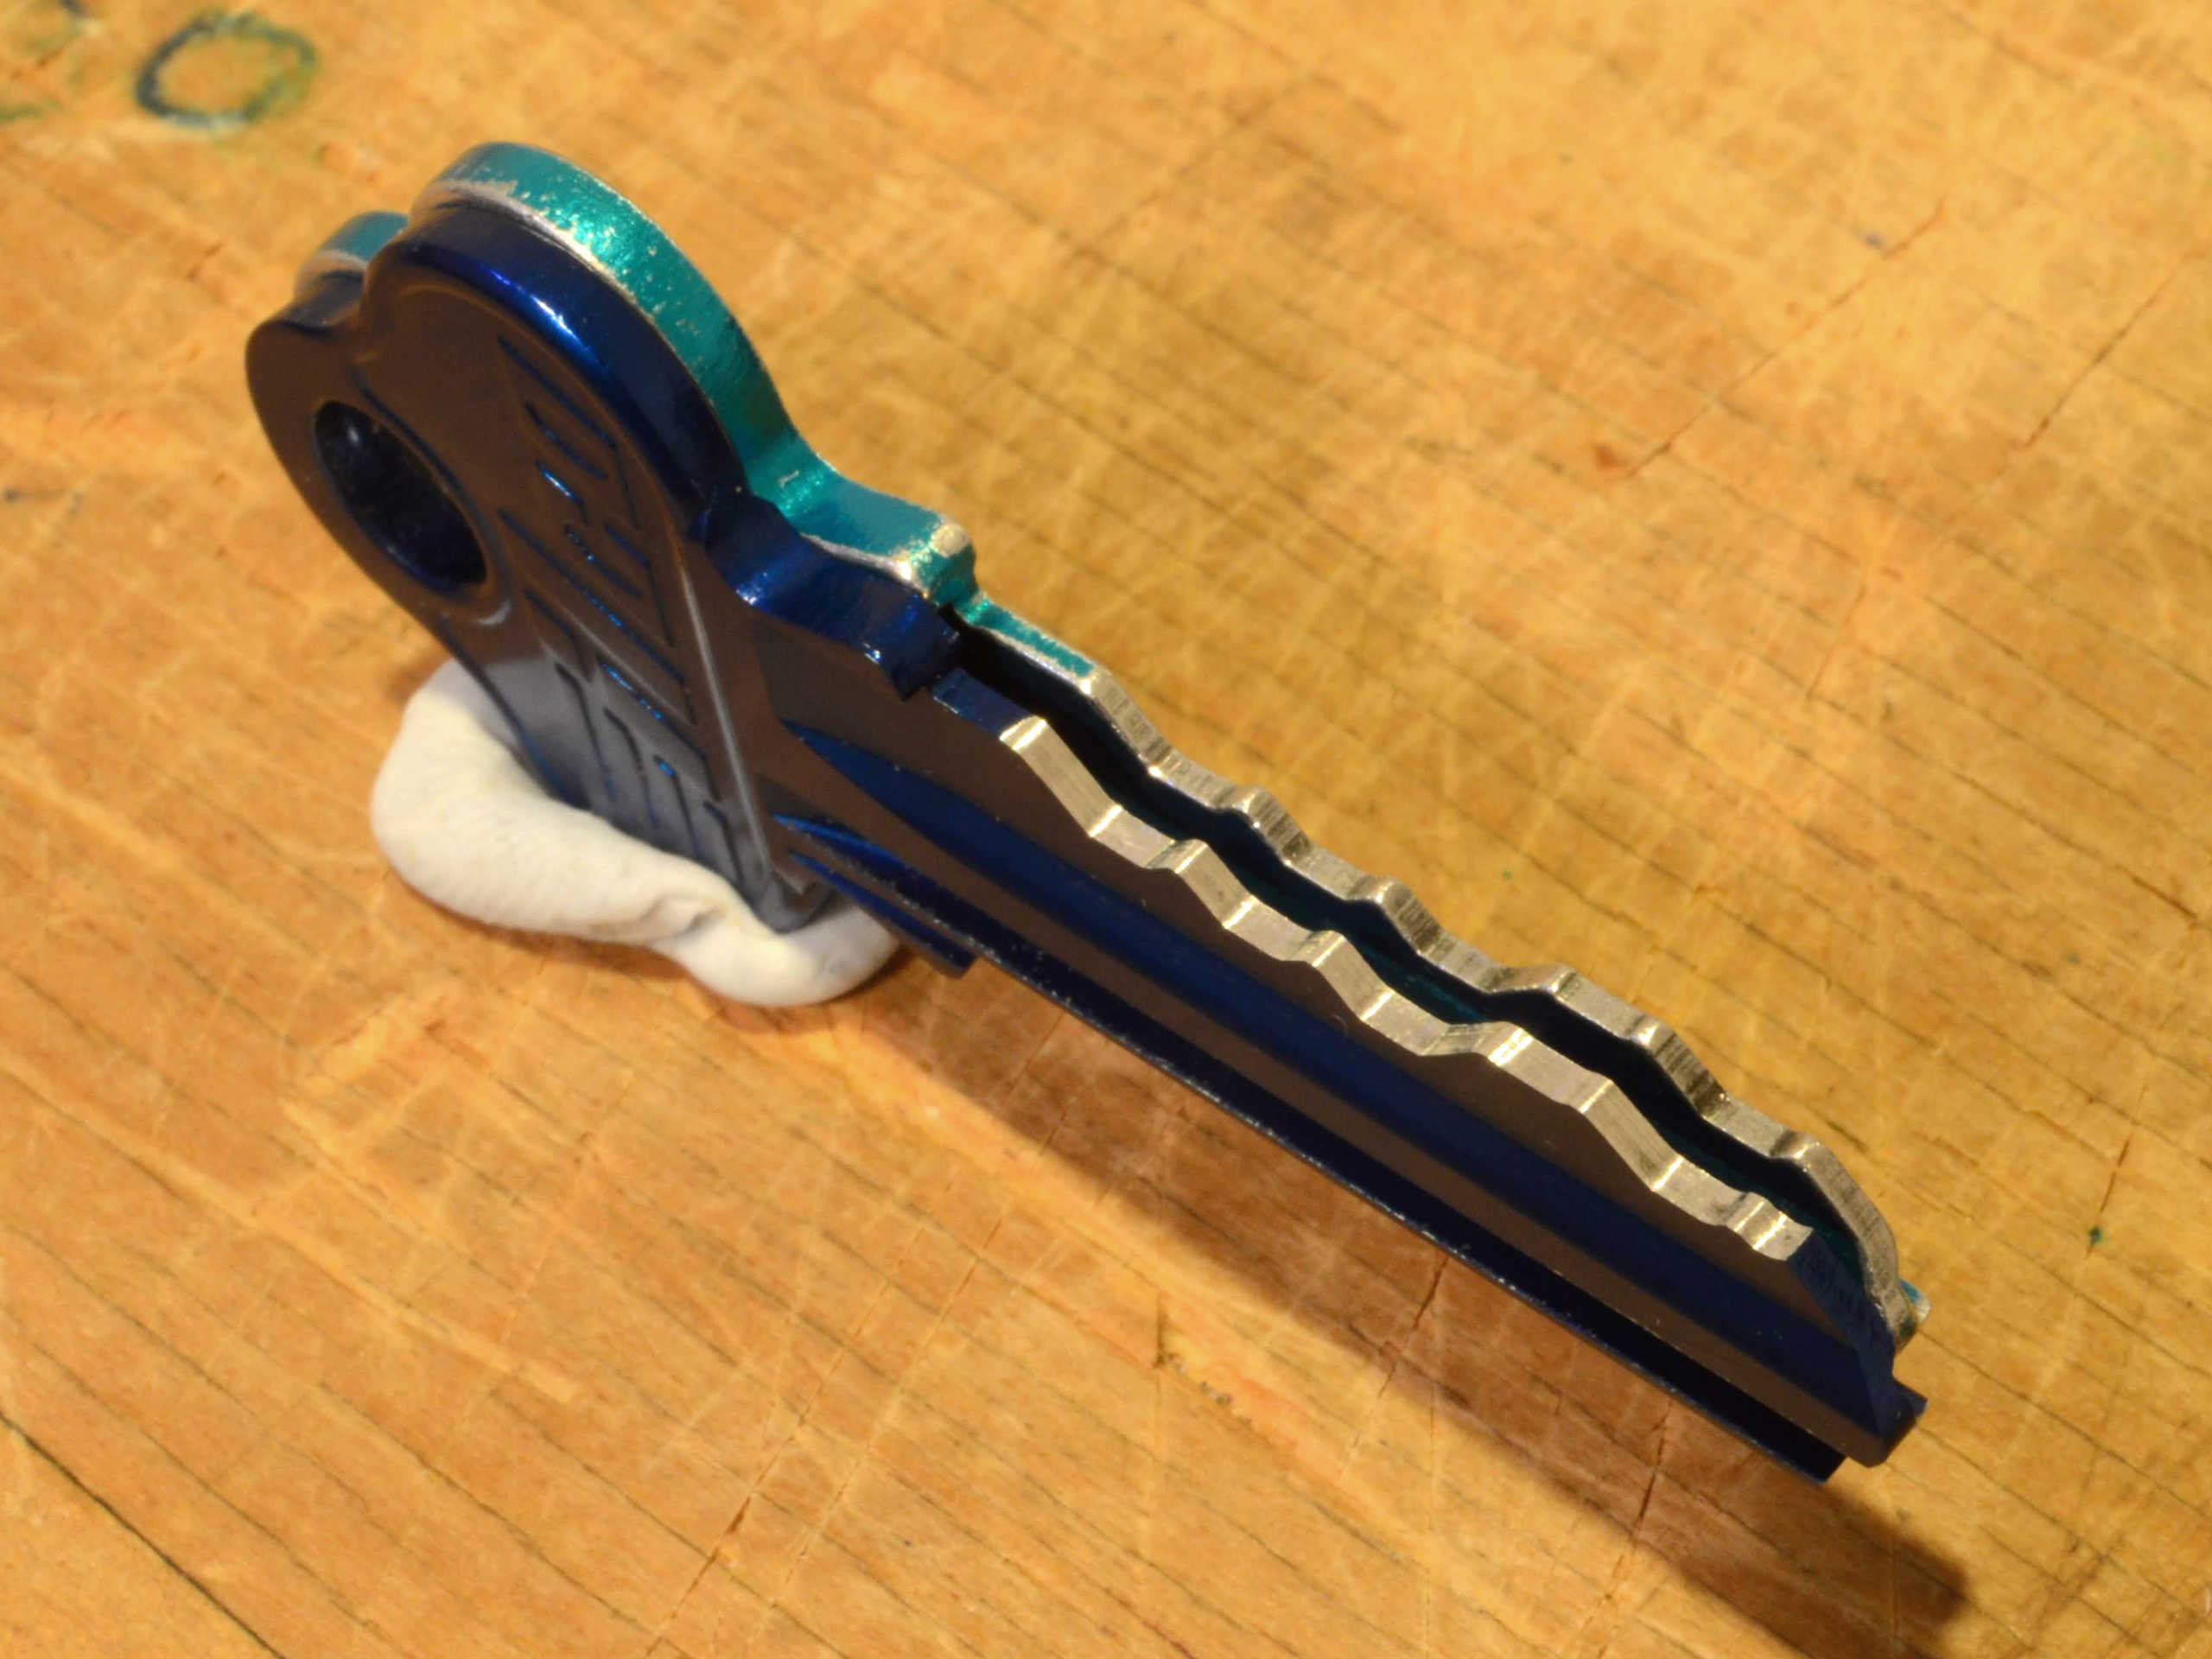 Comparison of new key (dark blue) with original key (light blue)